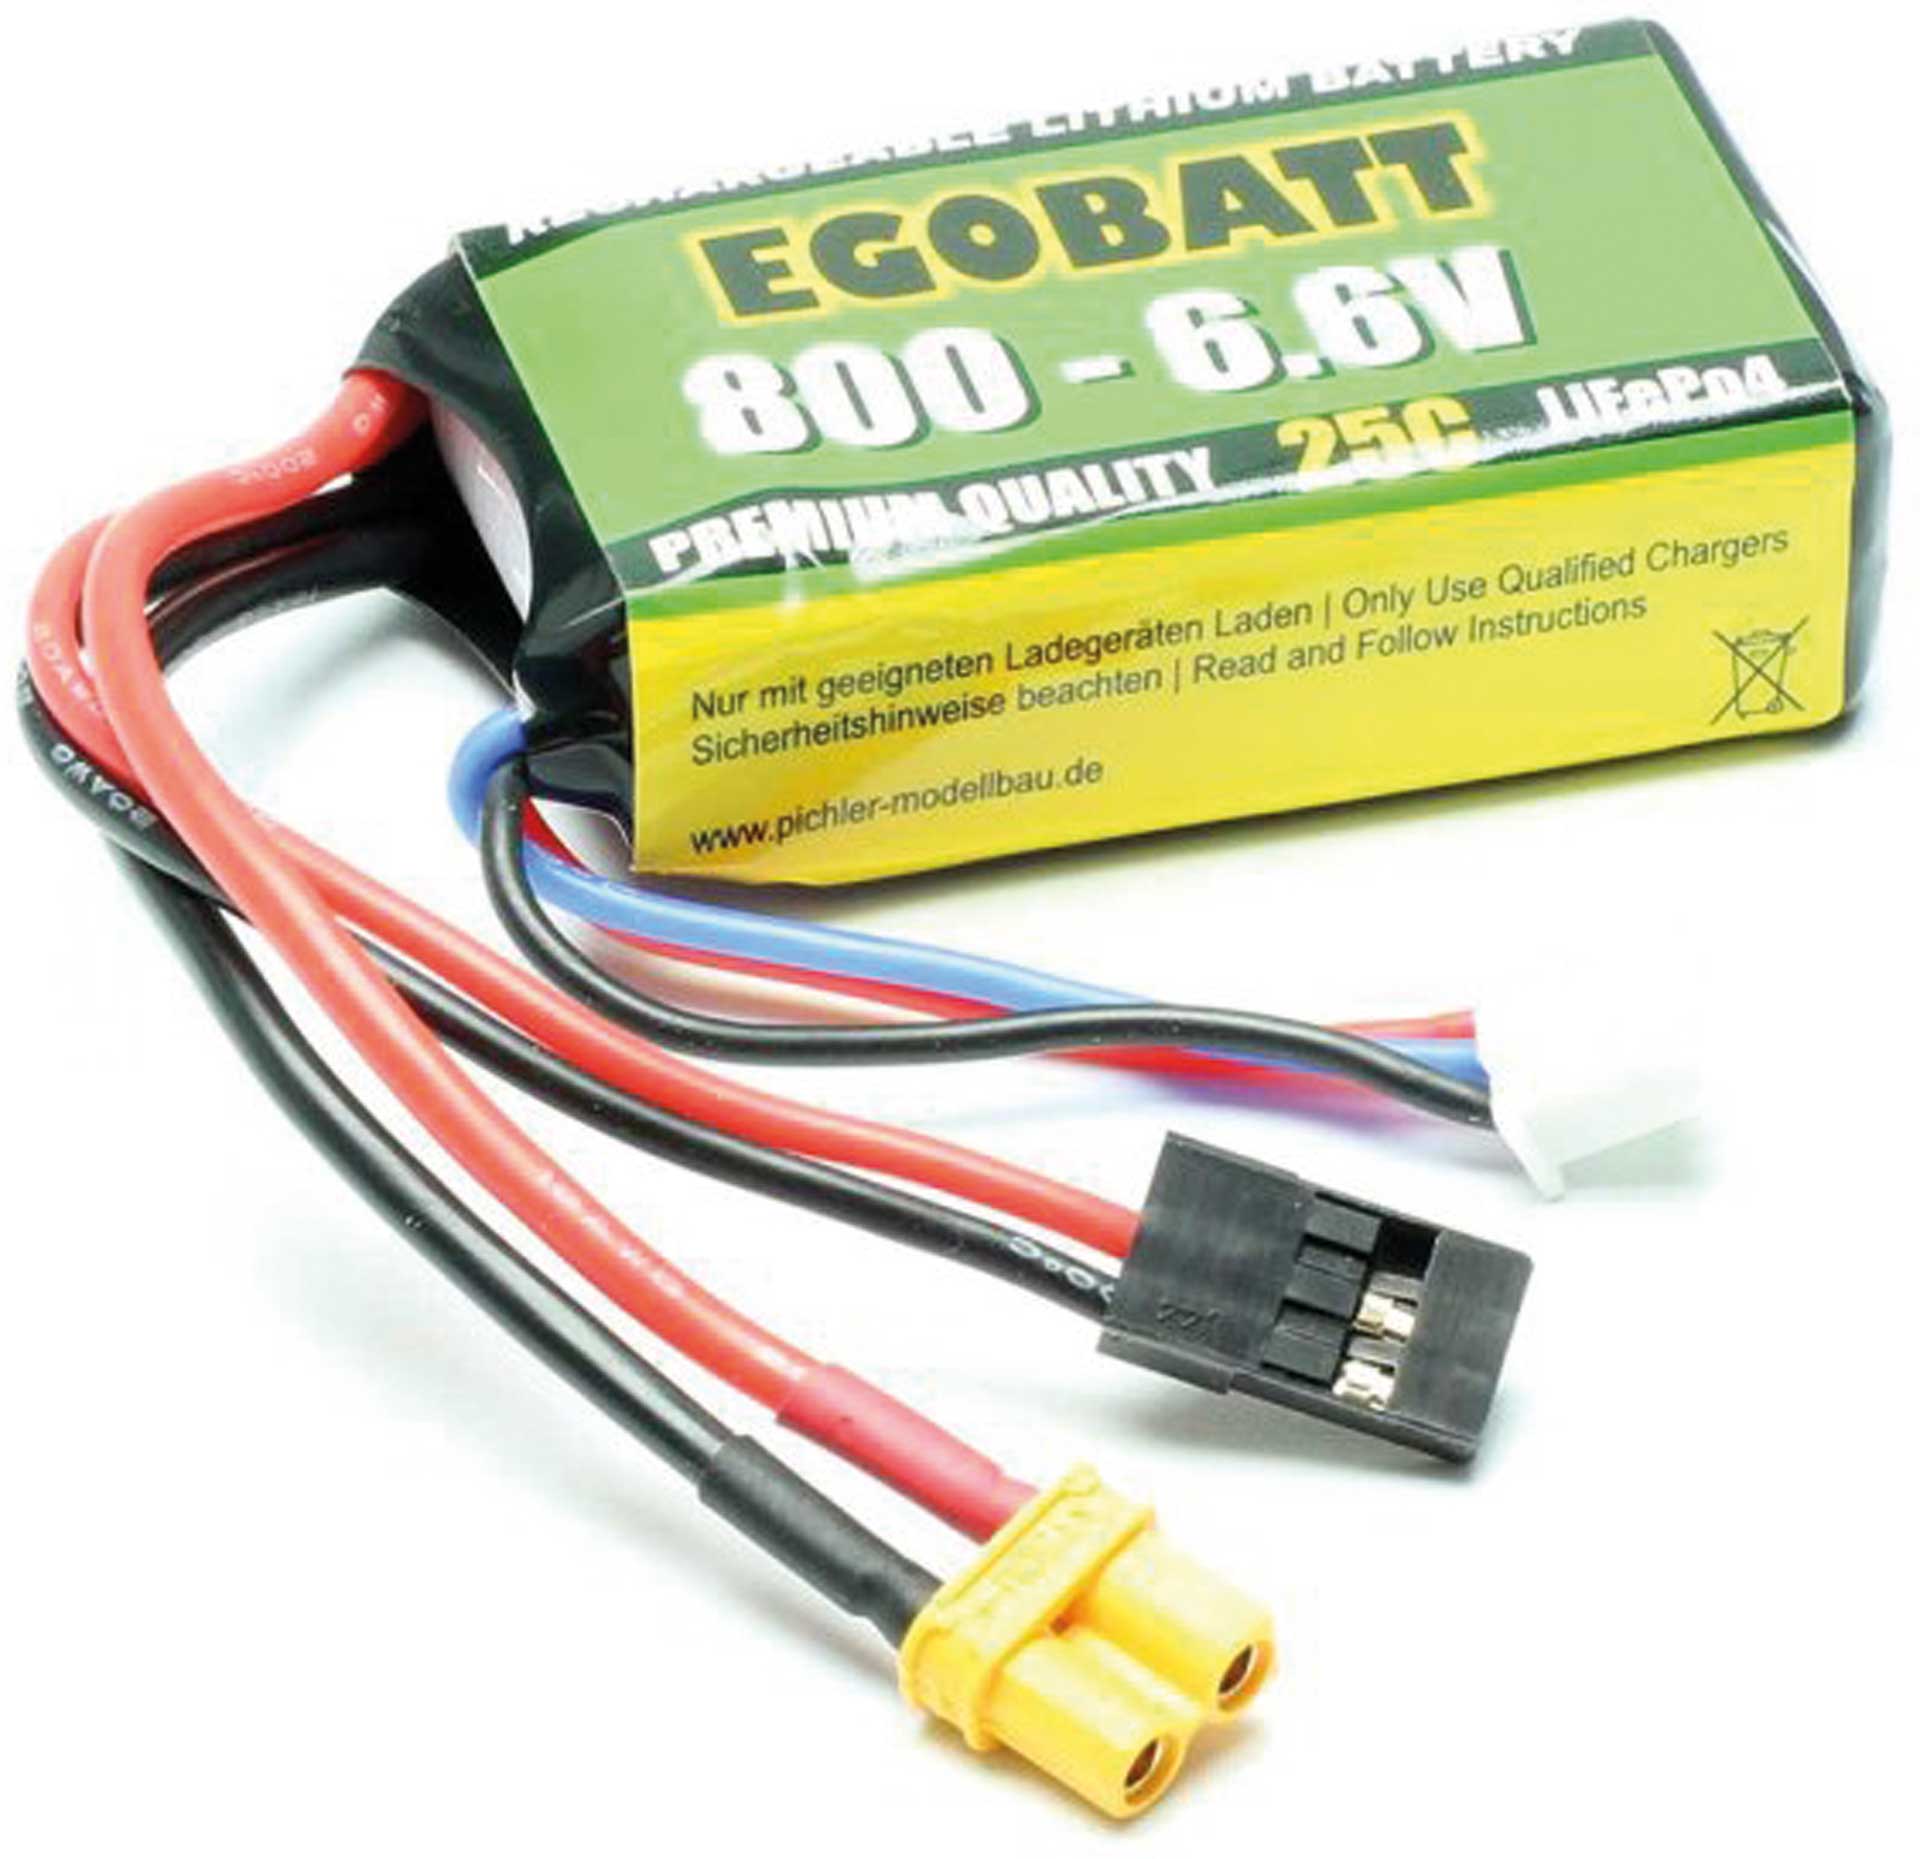 Pichler LiFe battery EGOBATT 800 - 6.6V (25C)